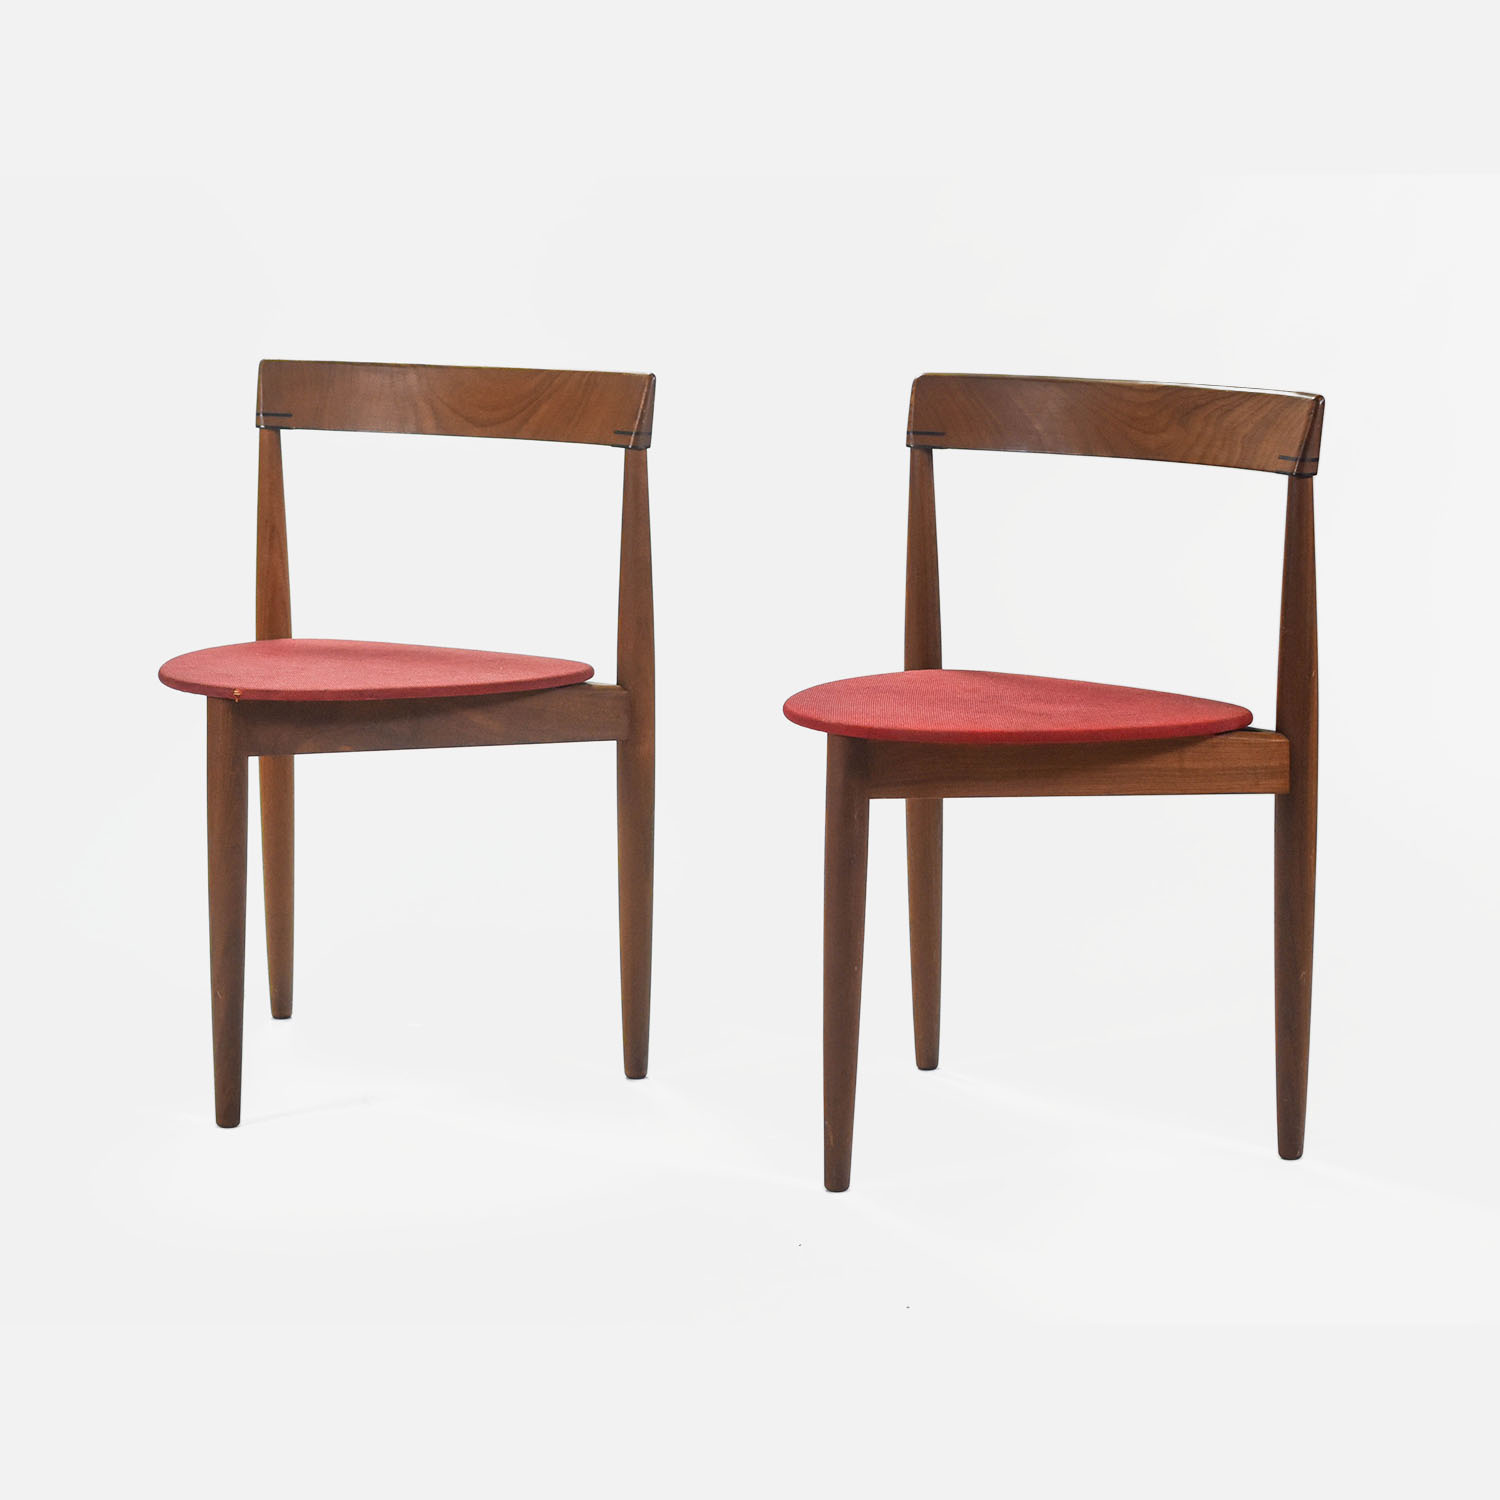 Two Hans Olsen Danish Modern Chairs by Frem Rojle